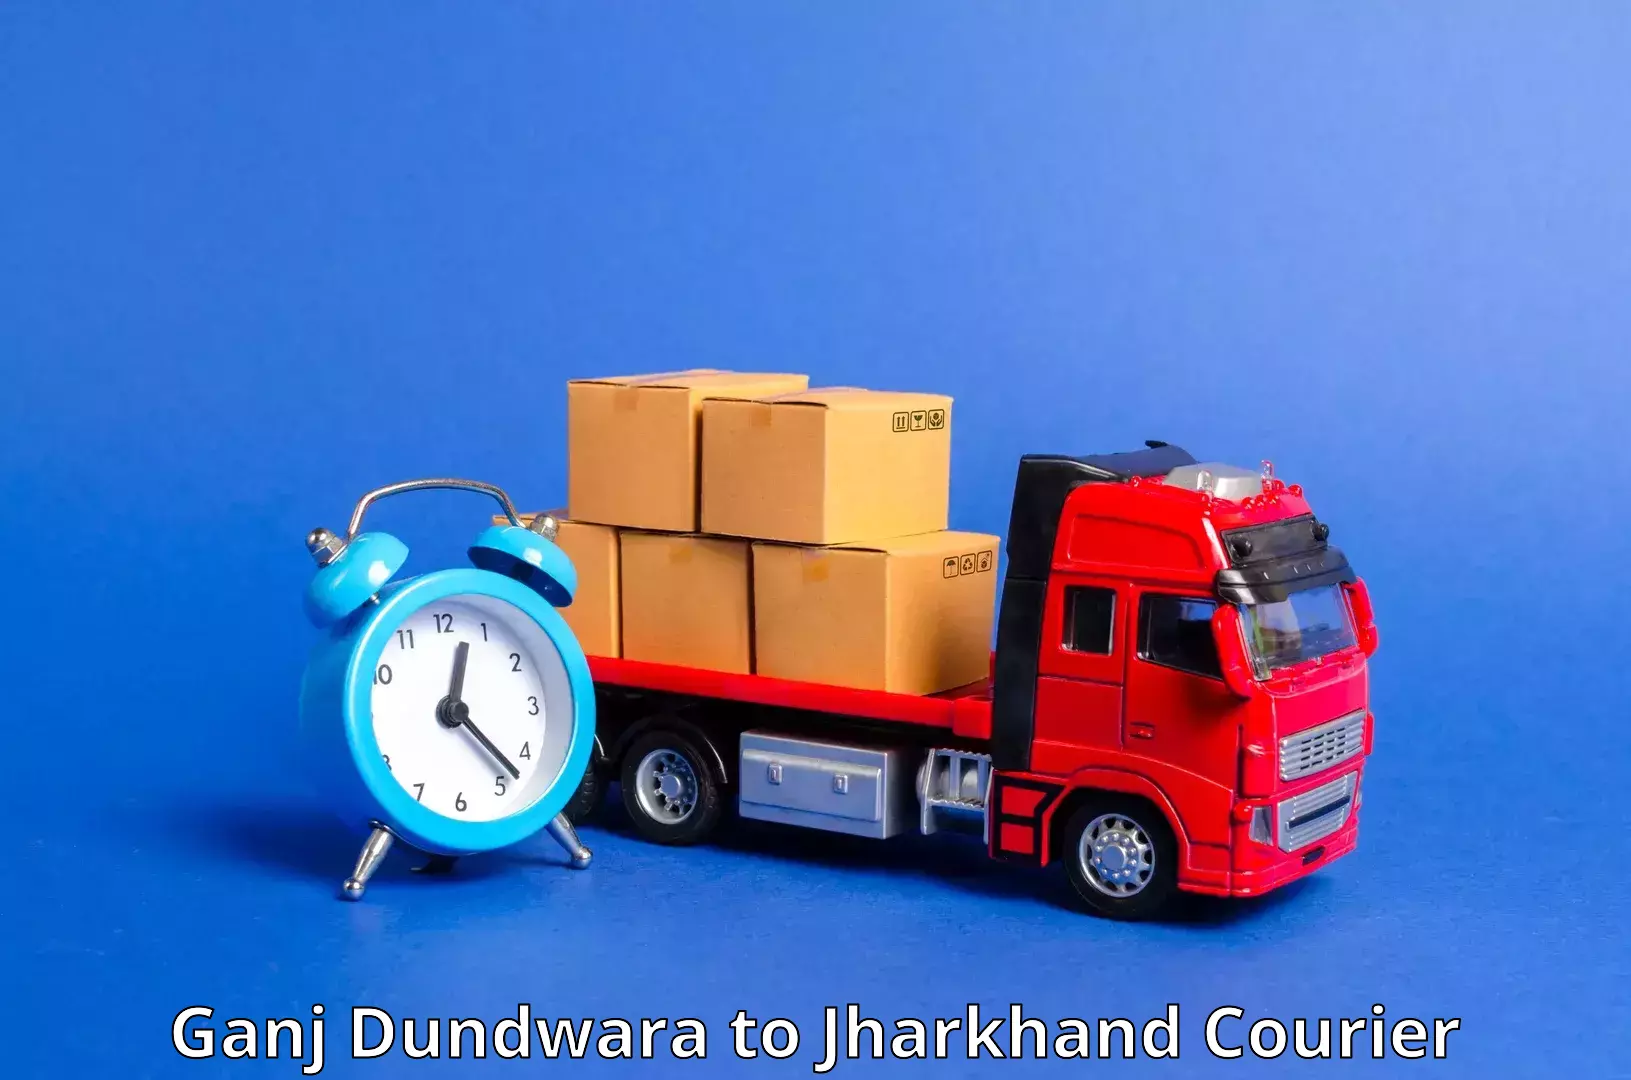 State-of-the-art courier technology Ganj Dundwara to Satbarwa